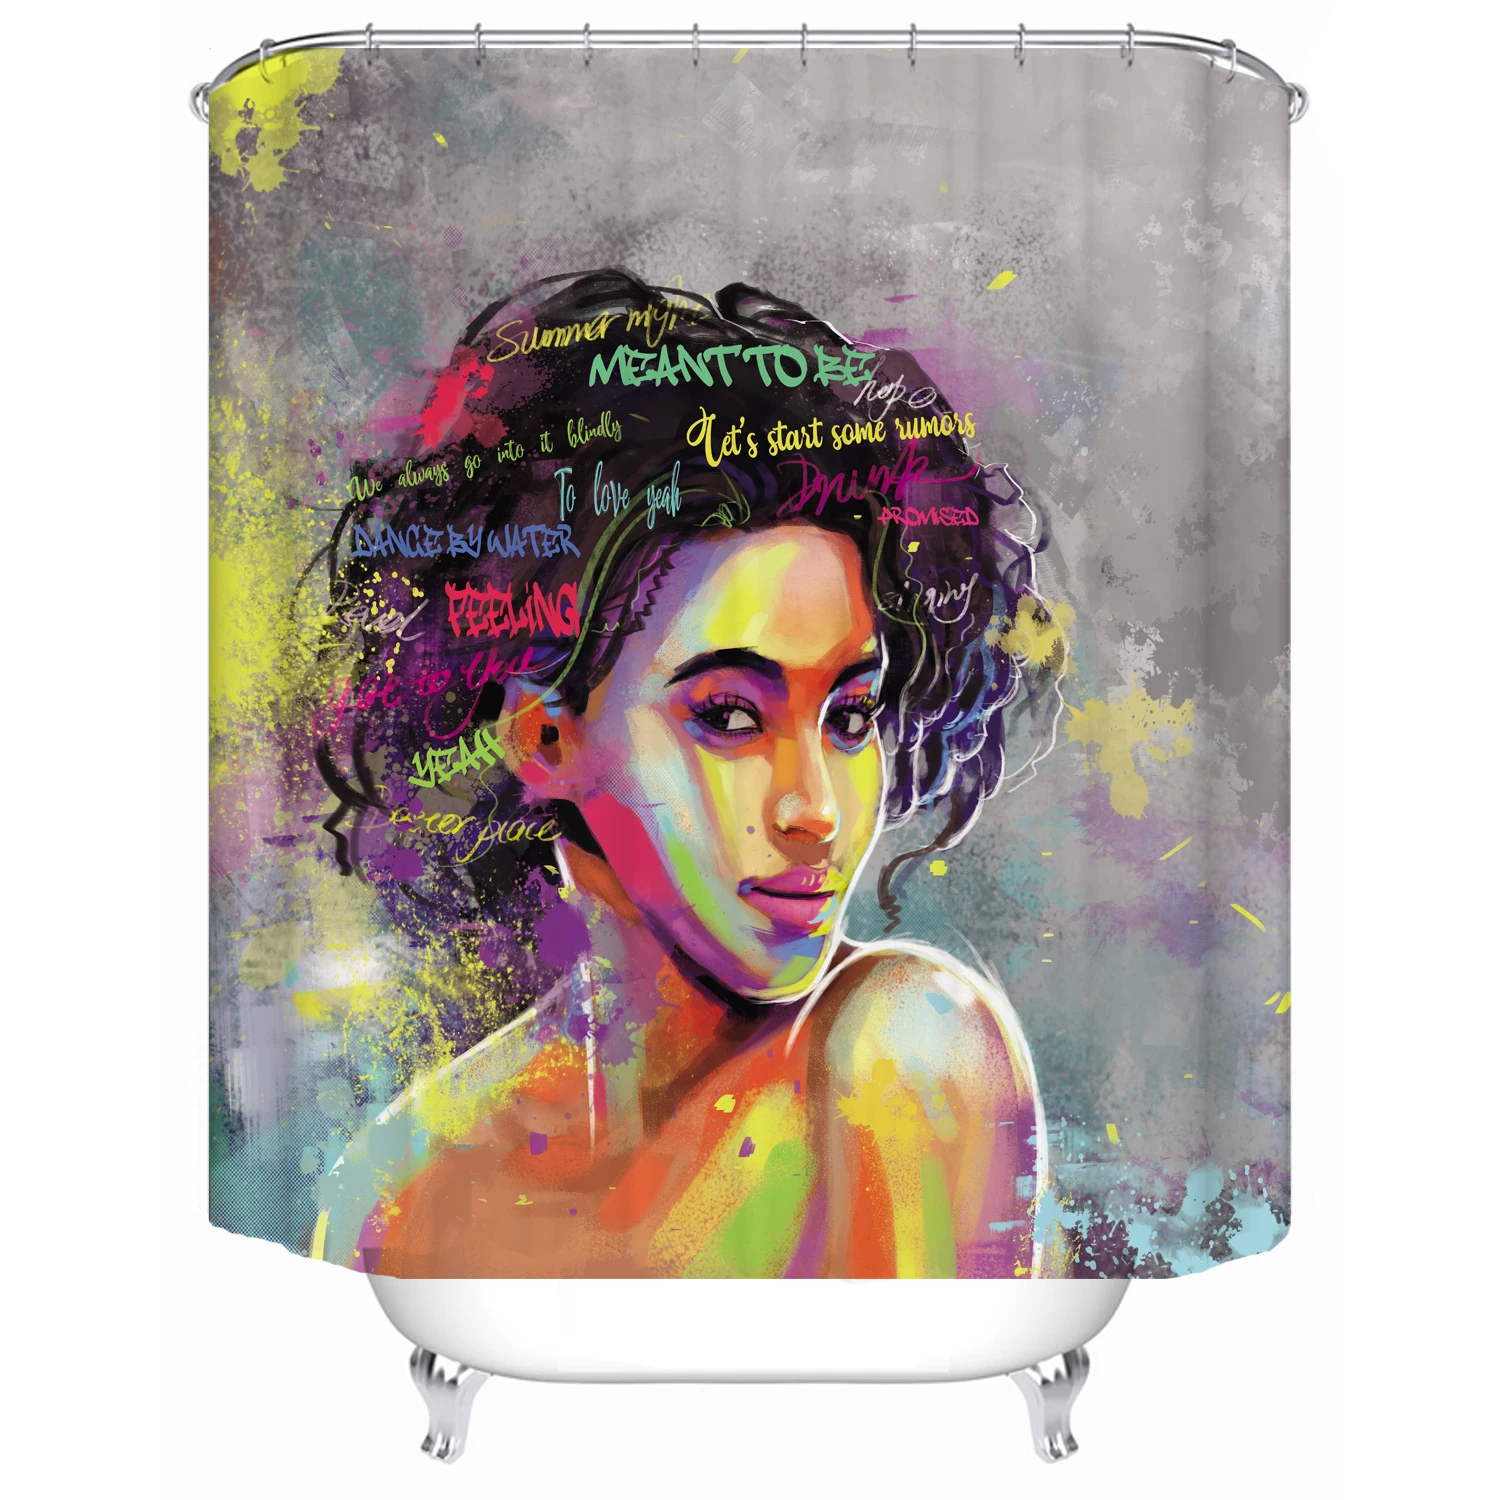 

African Woman American Black Girl Print Waterproof Fabric Shower Curtain Liner Covered Bathtub Bathroom Curtains 12 Hooks